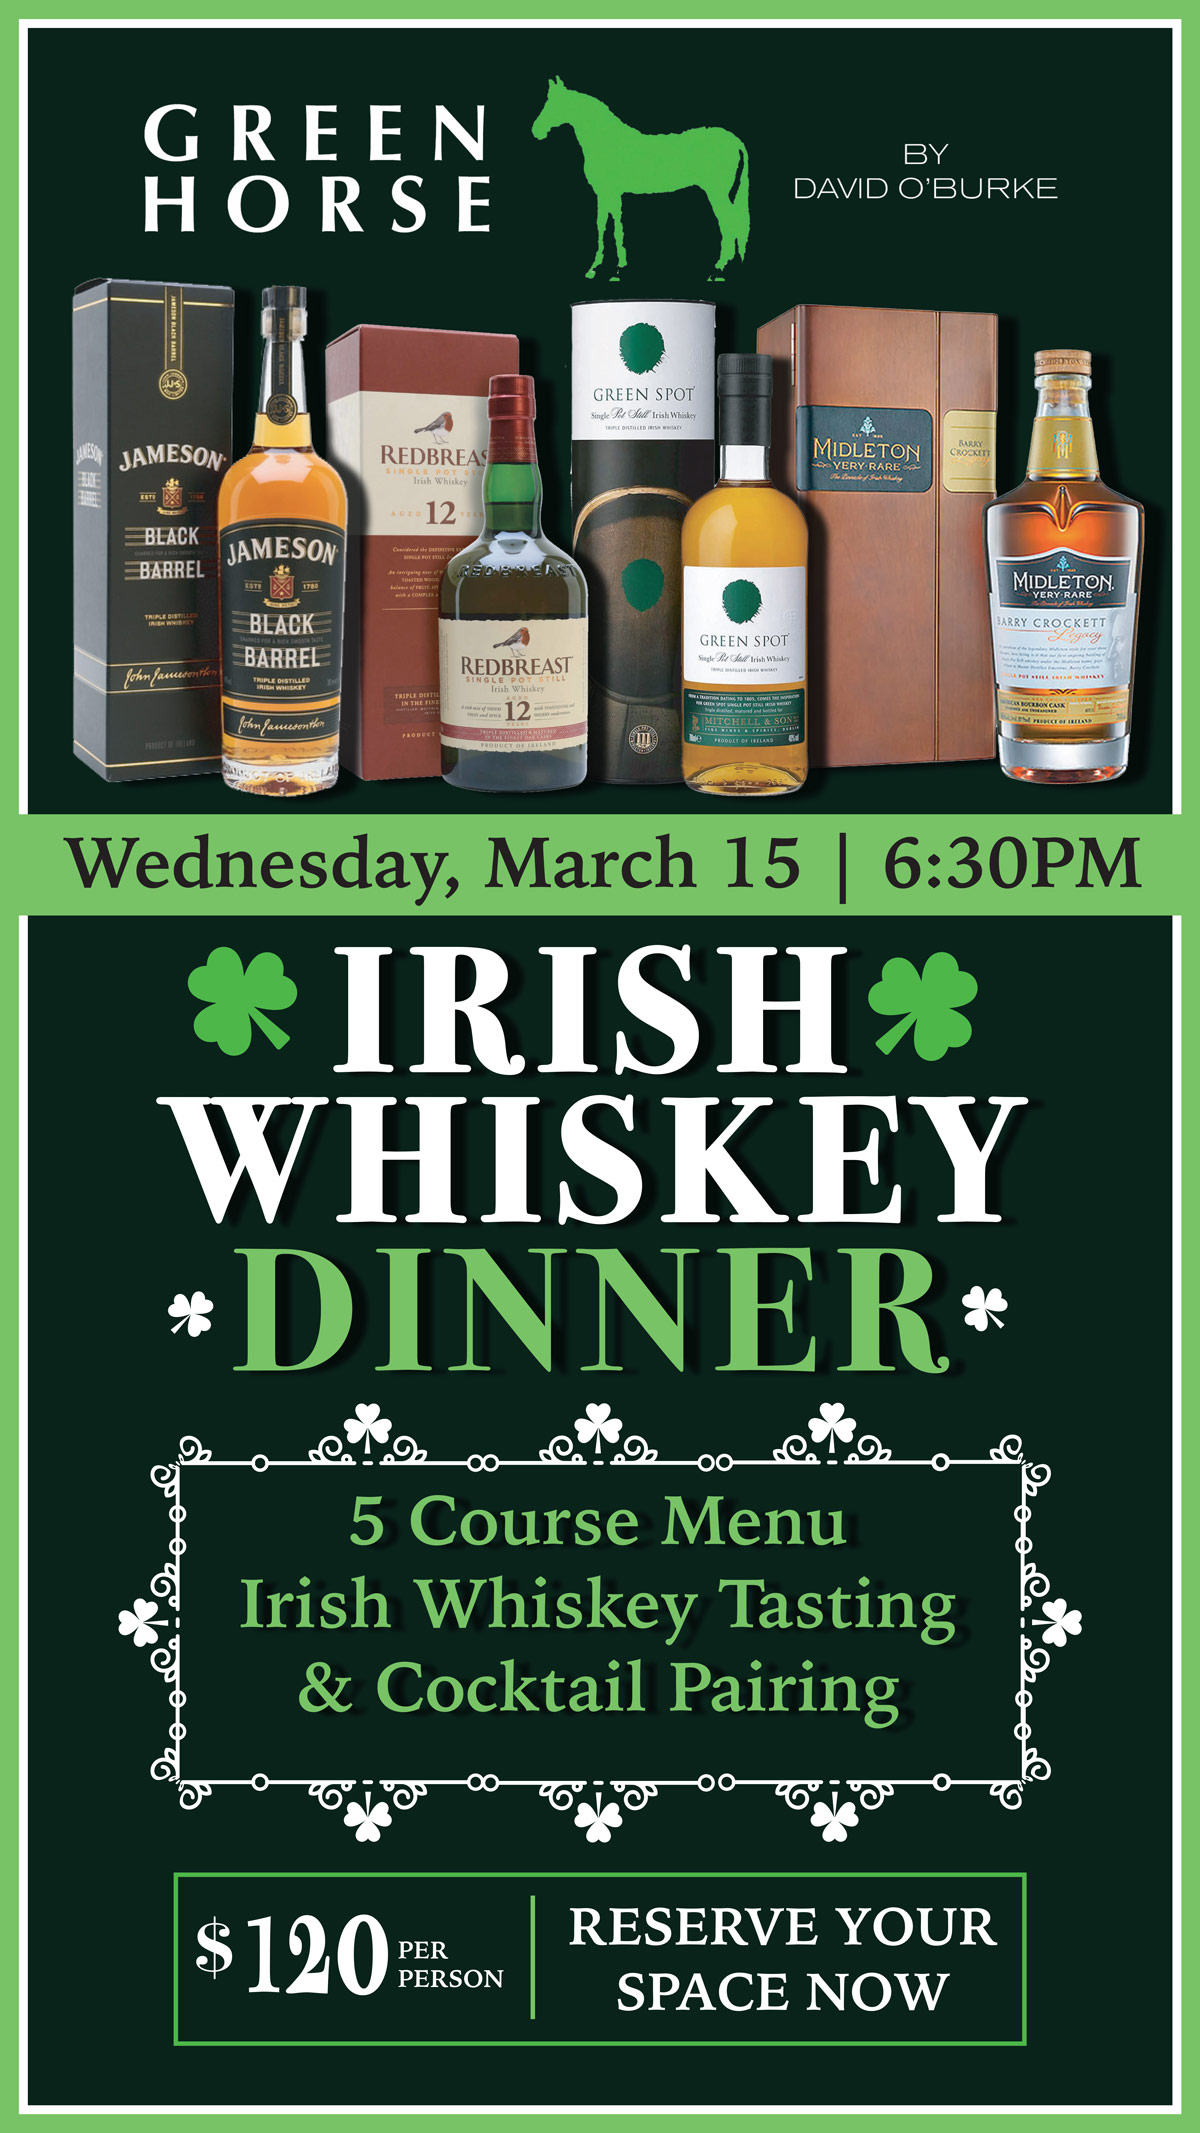 Green Horse Irish Whiskey Dinner